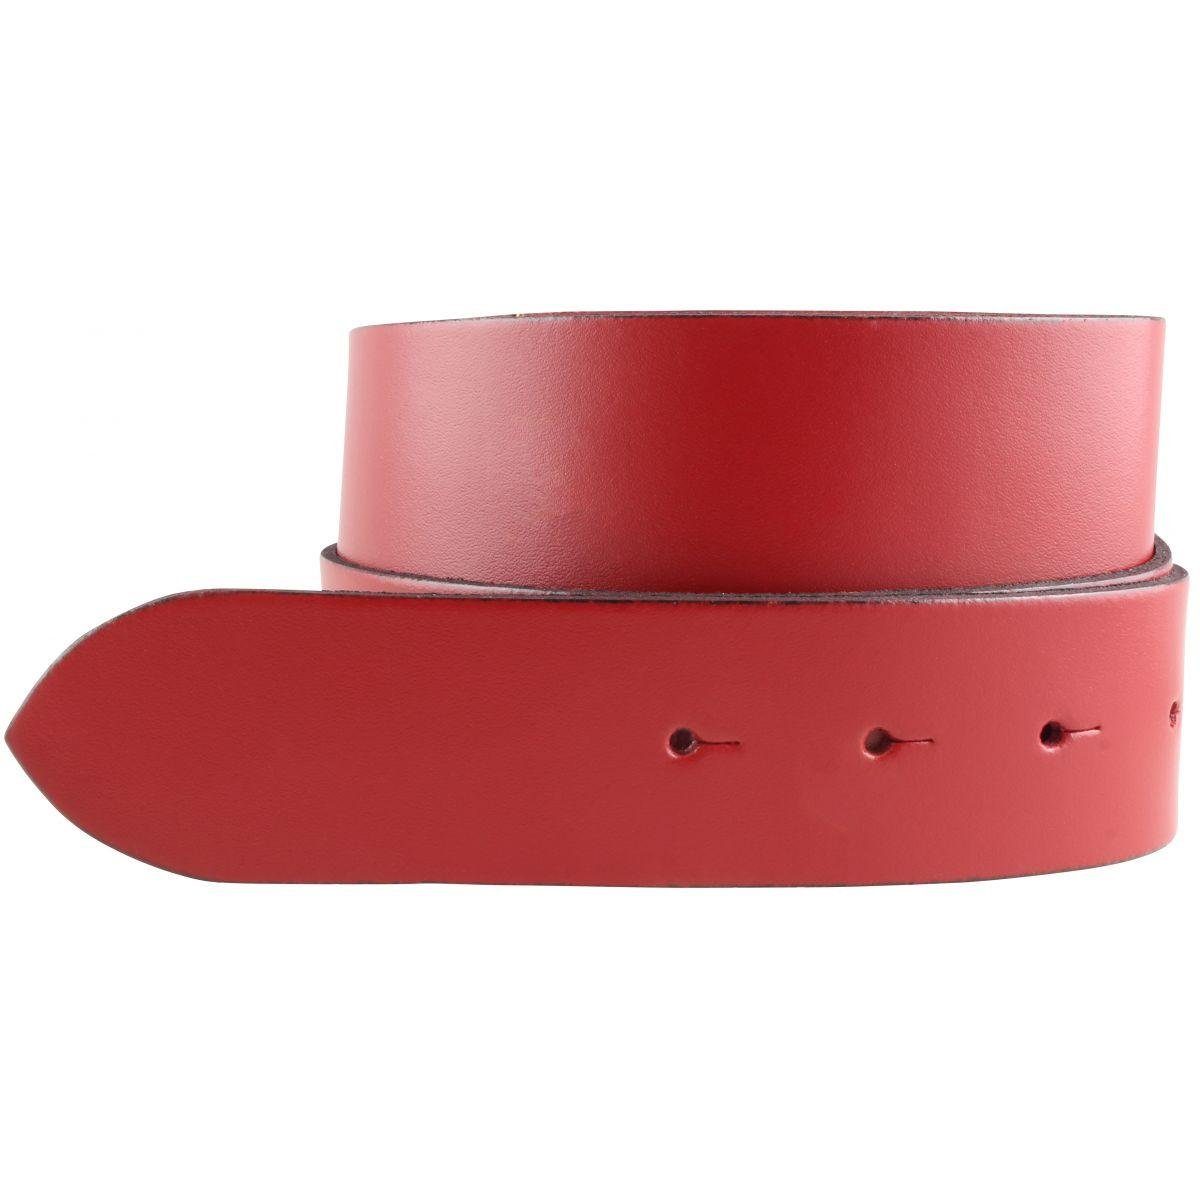 BELTINGER Ledergürtel Wechselgürtel aus 100% echtem Leder 4 cm - Druckknopf-Gürtel für Damen Rot